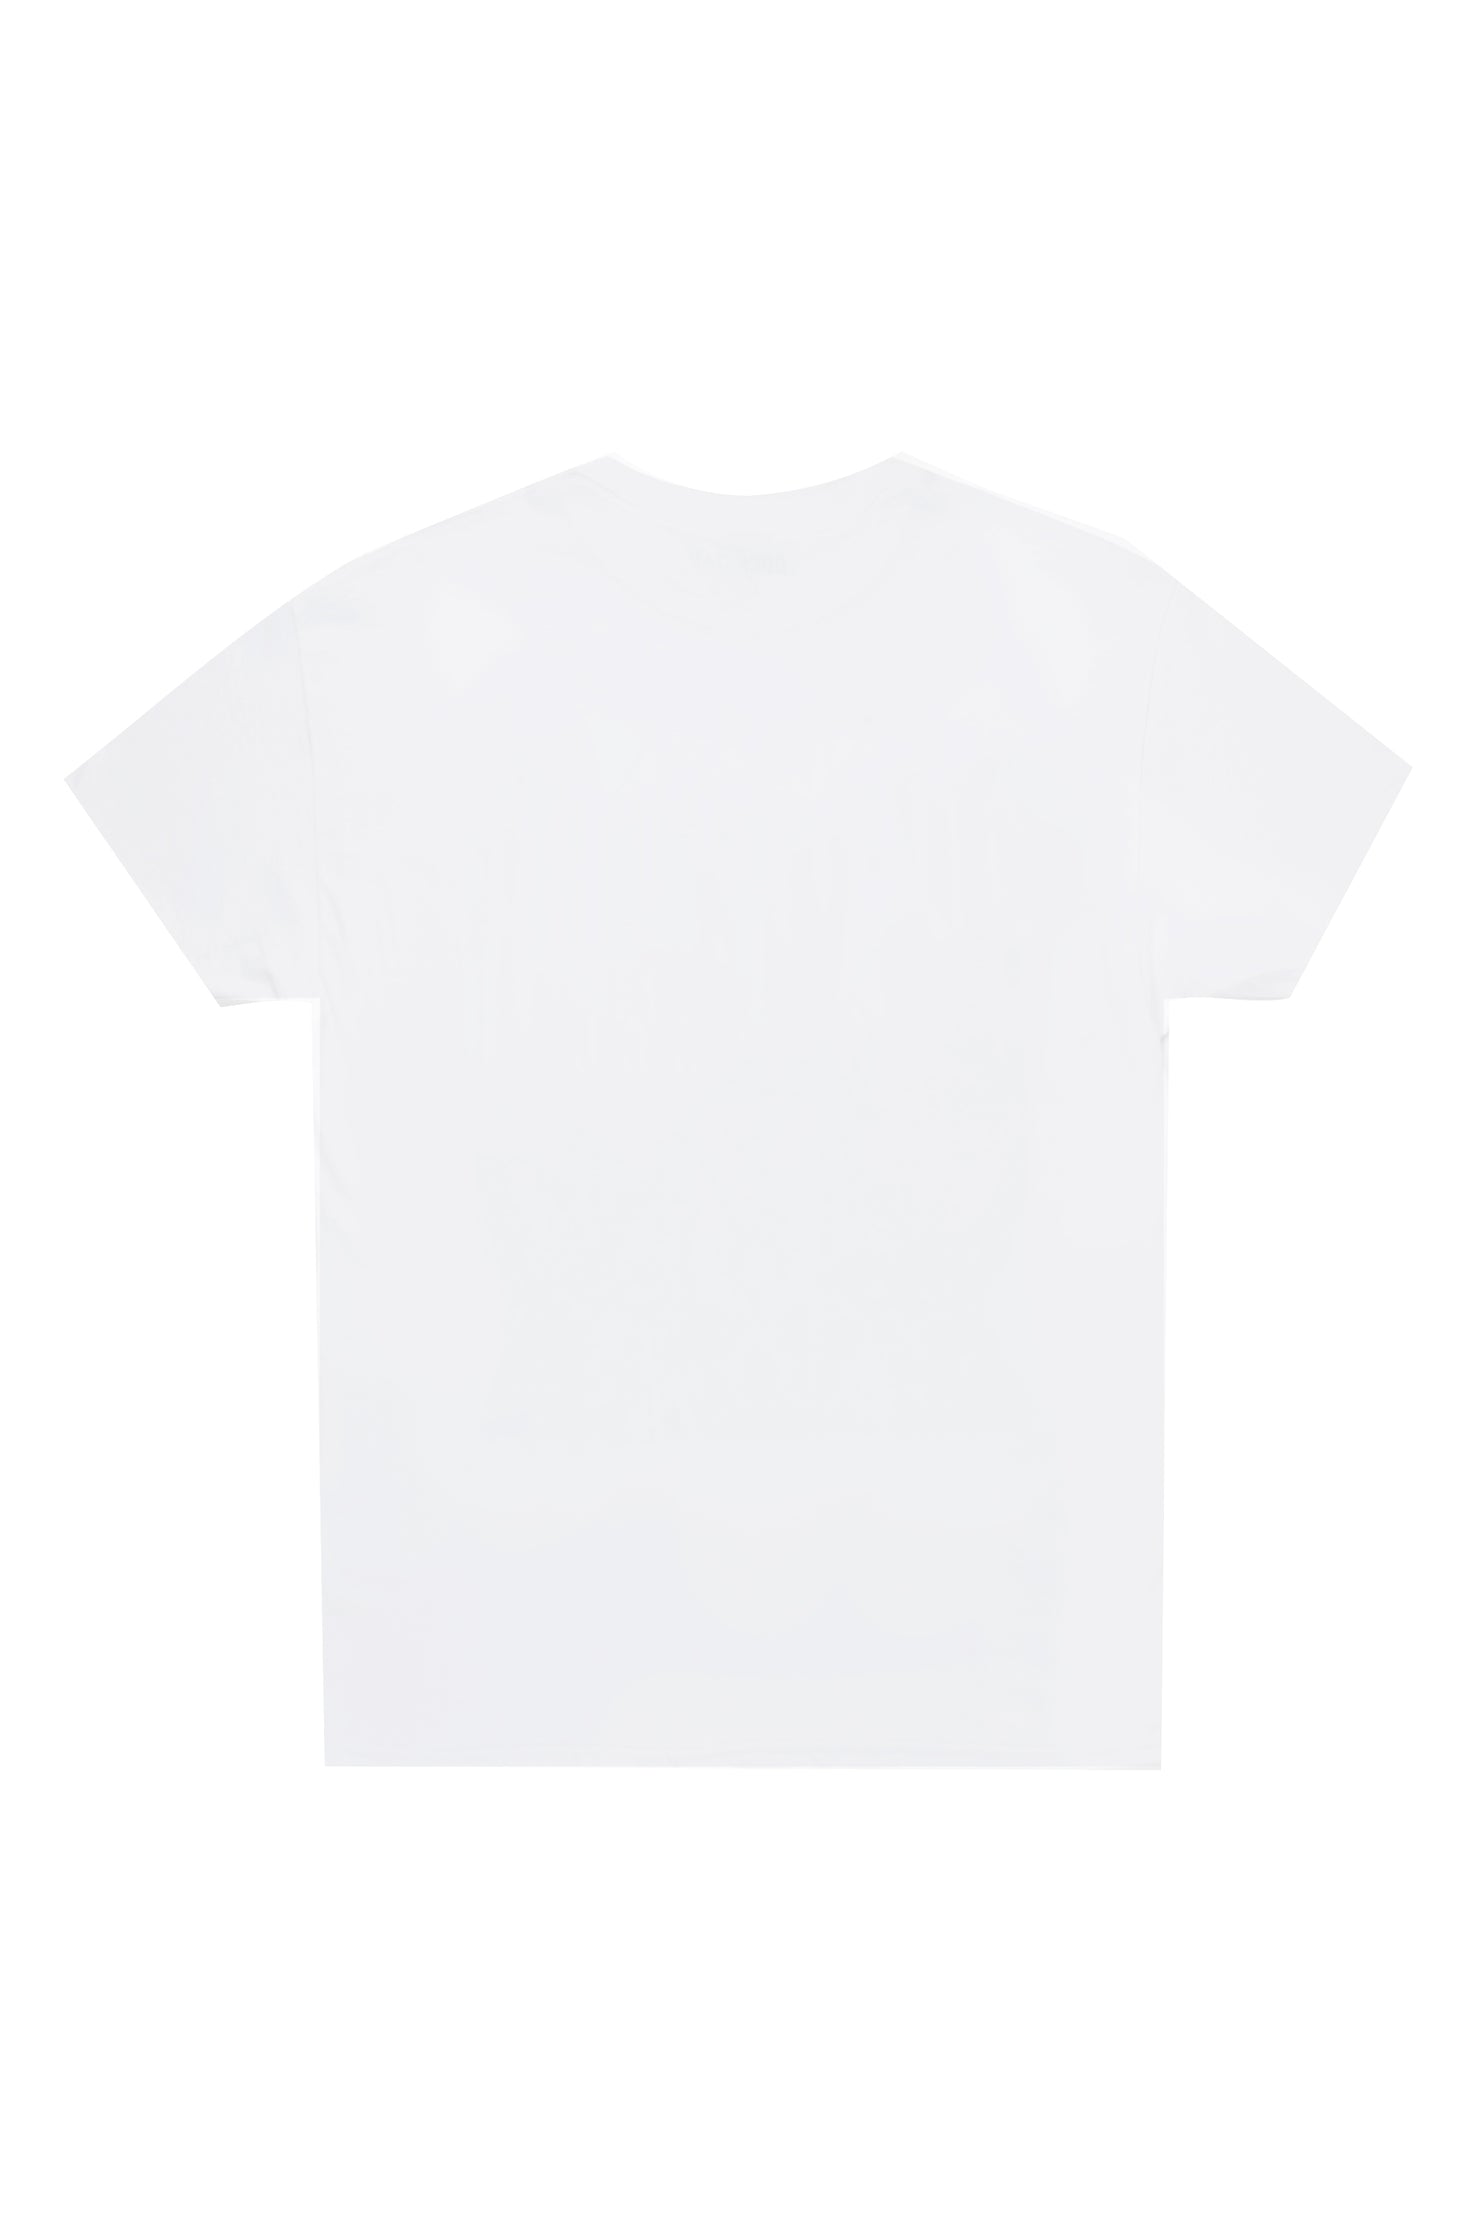 Boys Octavio Printed T-Shirt-White/Blue